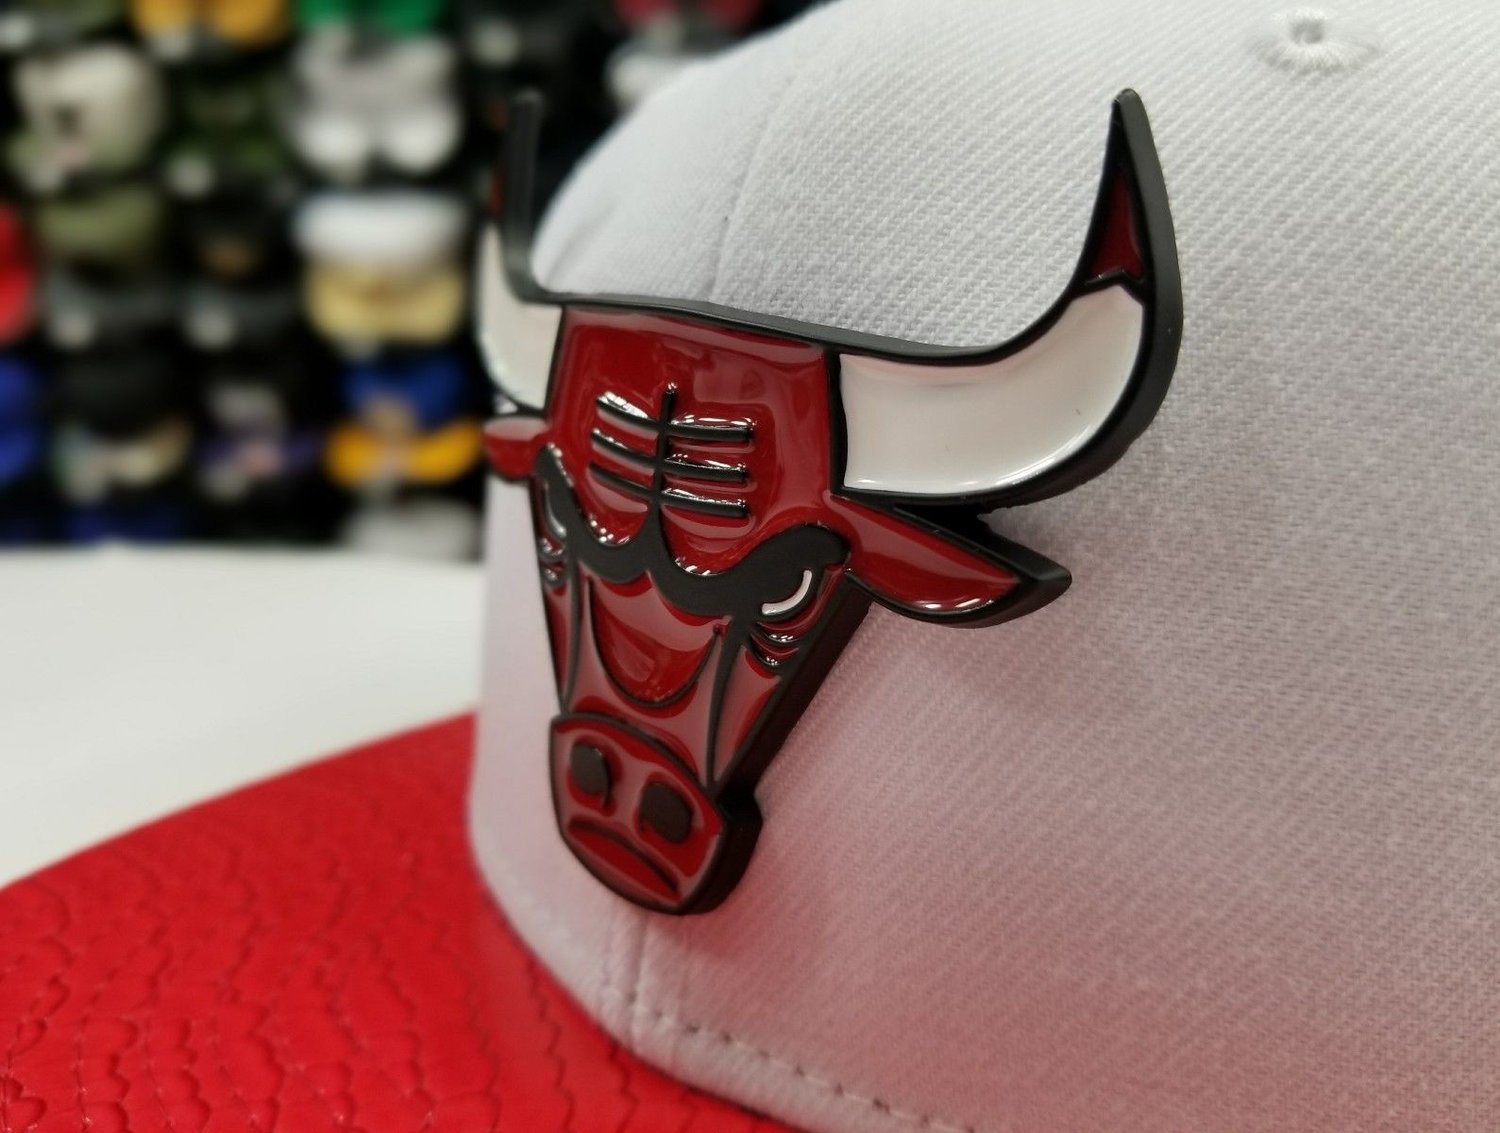 New Era 9Fifty NBA Chicago Bulls White / Red Metal Badge Strapback Hat